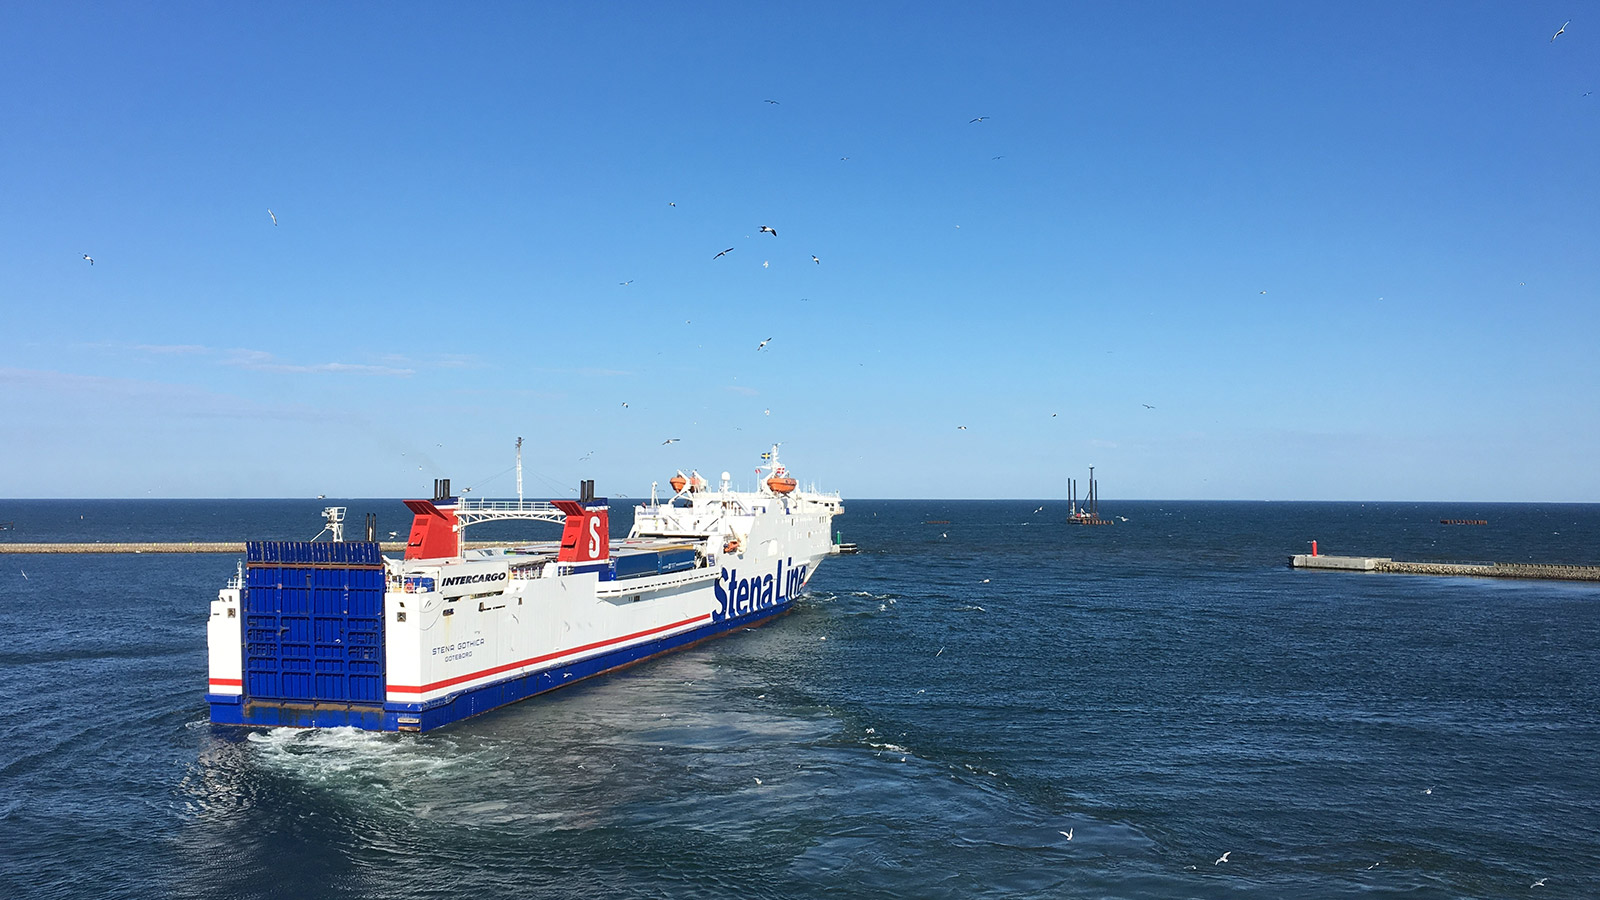 Stena Line – A Communications Platform to Keep Europe Sailing